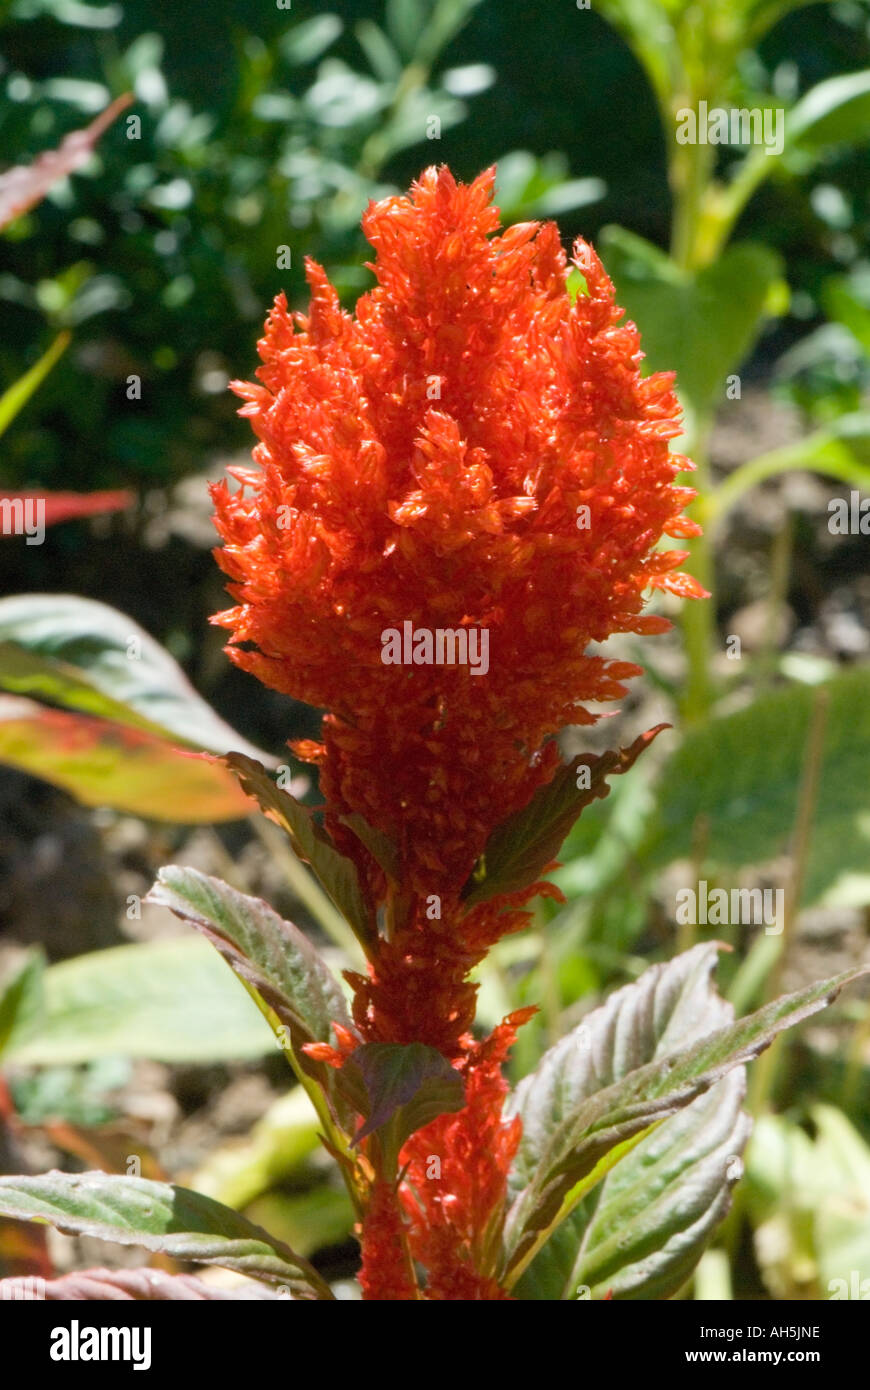 Celosia red flowerhead Stock Photo